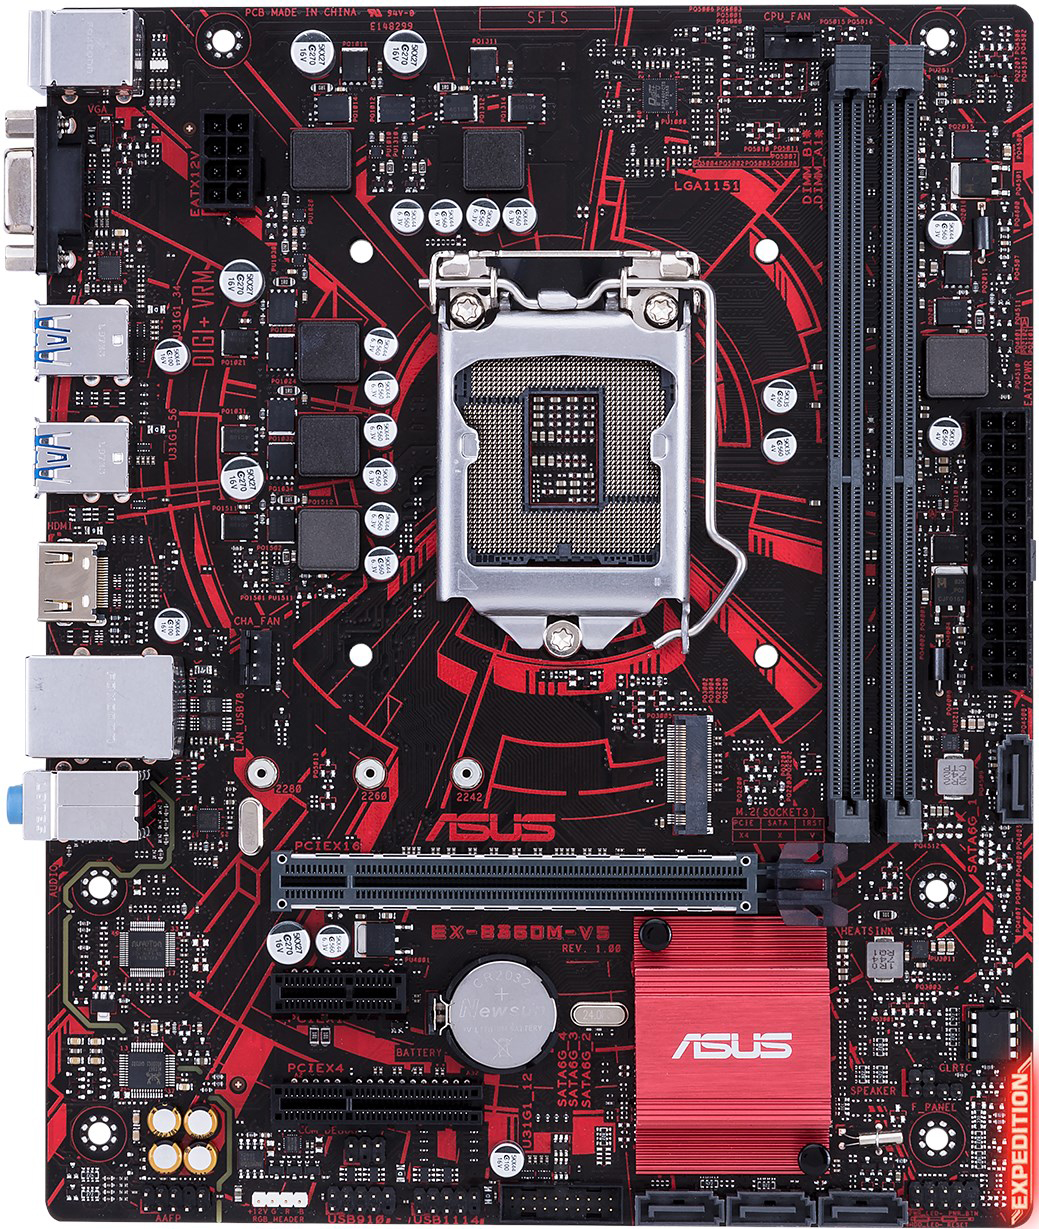 Asus EX-B360M-V5 GPU